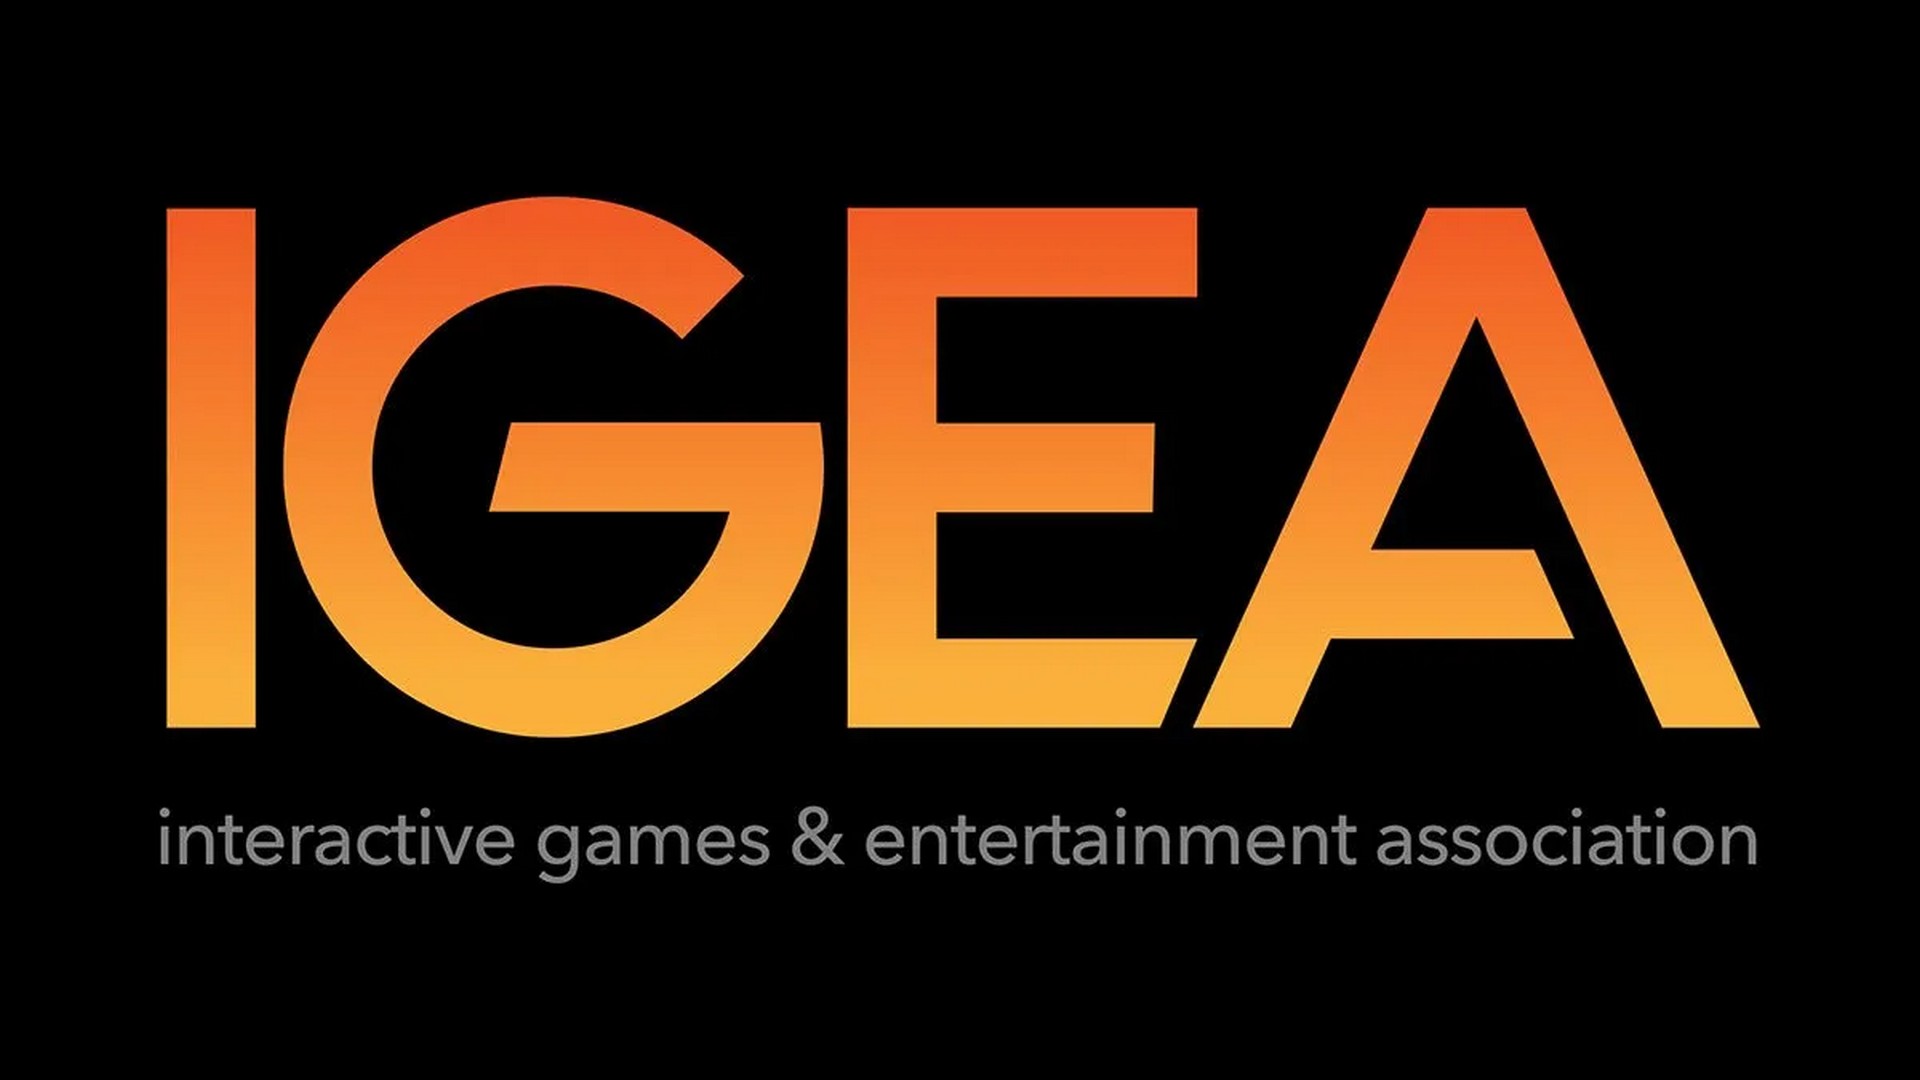 IGEA announces the winners of the 2022 Australian Game Developer Awards -  IGEA